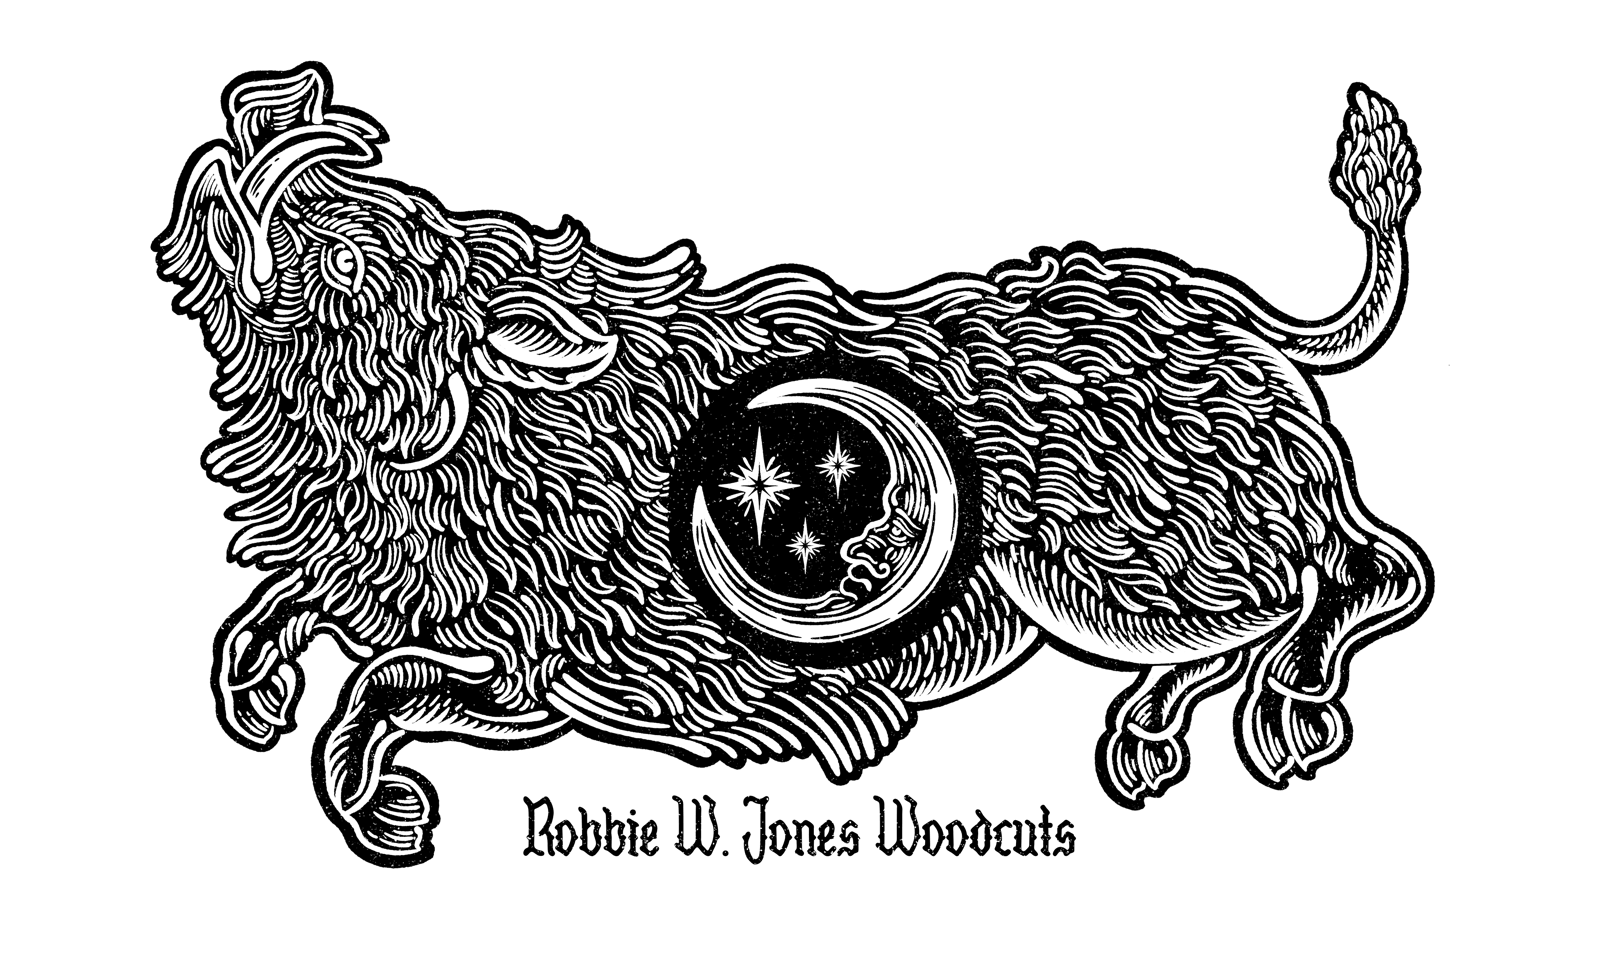 Robbie W. Jones Woodcuts